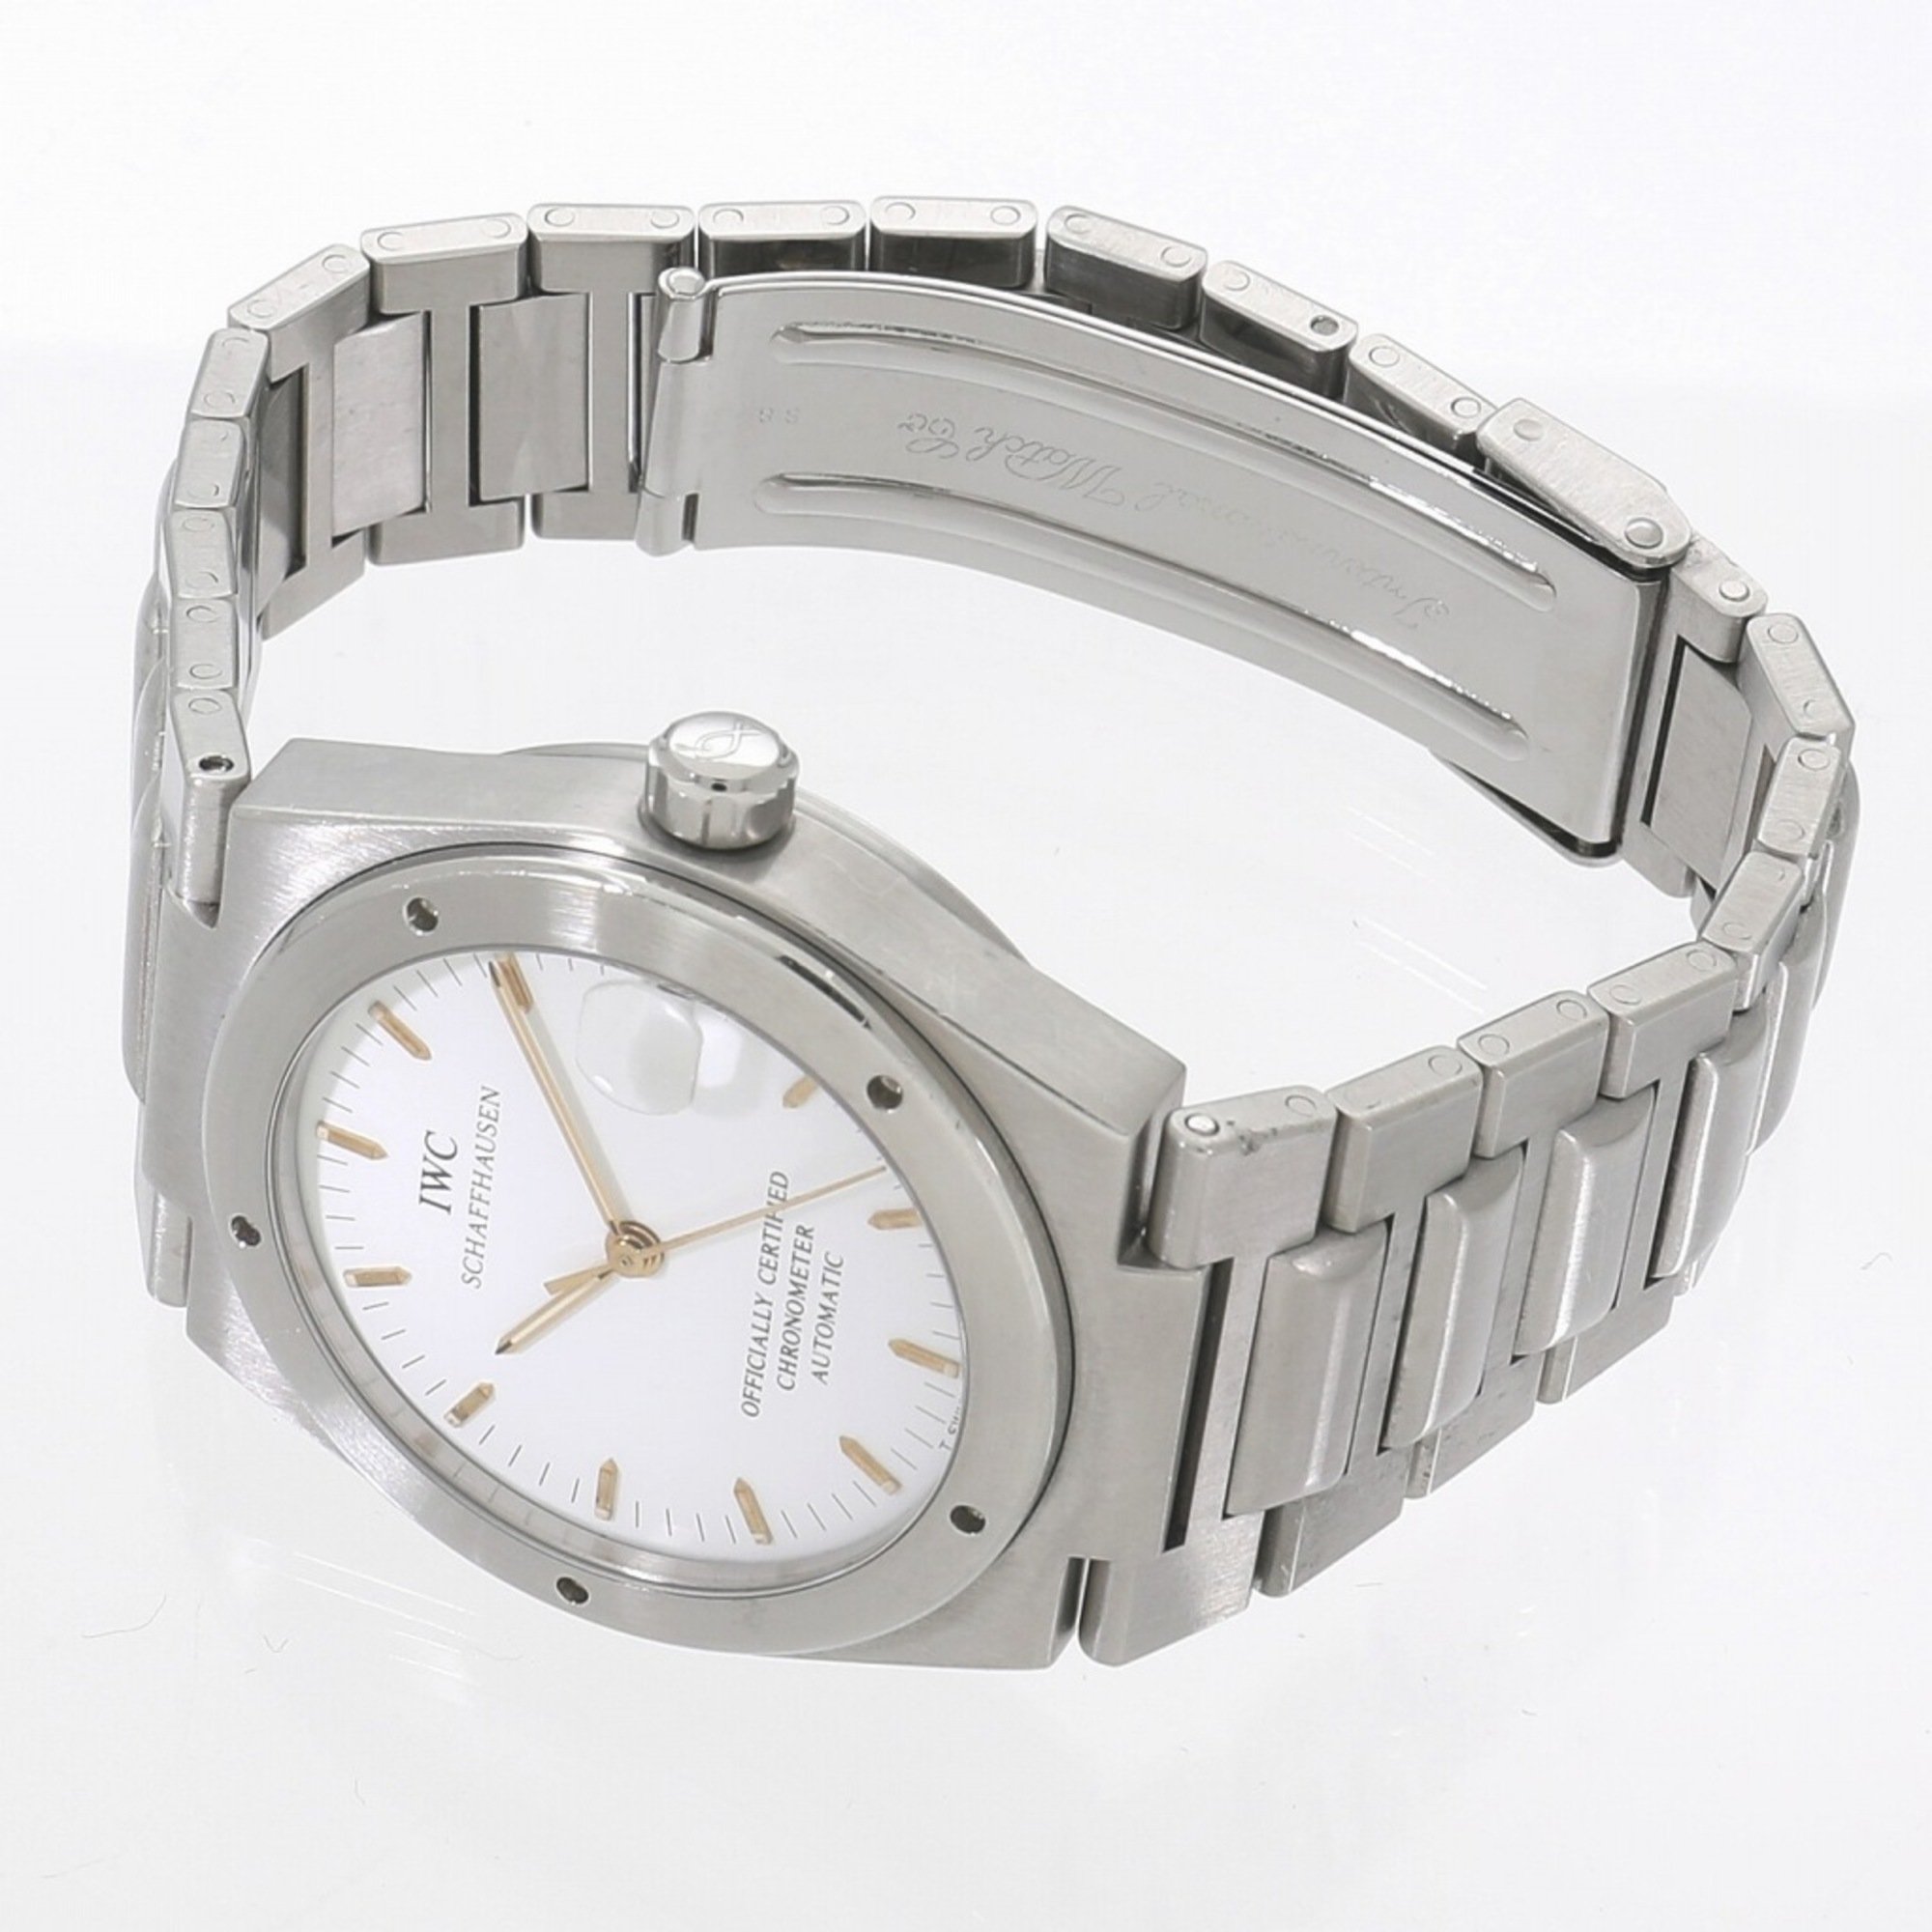 IWC Ingenieur Chronometer Automatic 3521-001 / IW352101 White Men's Watch